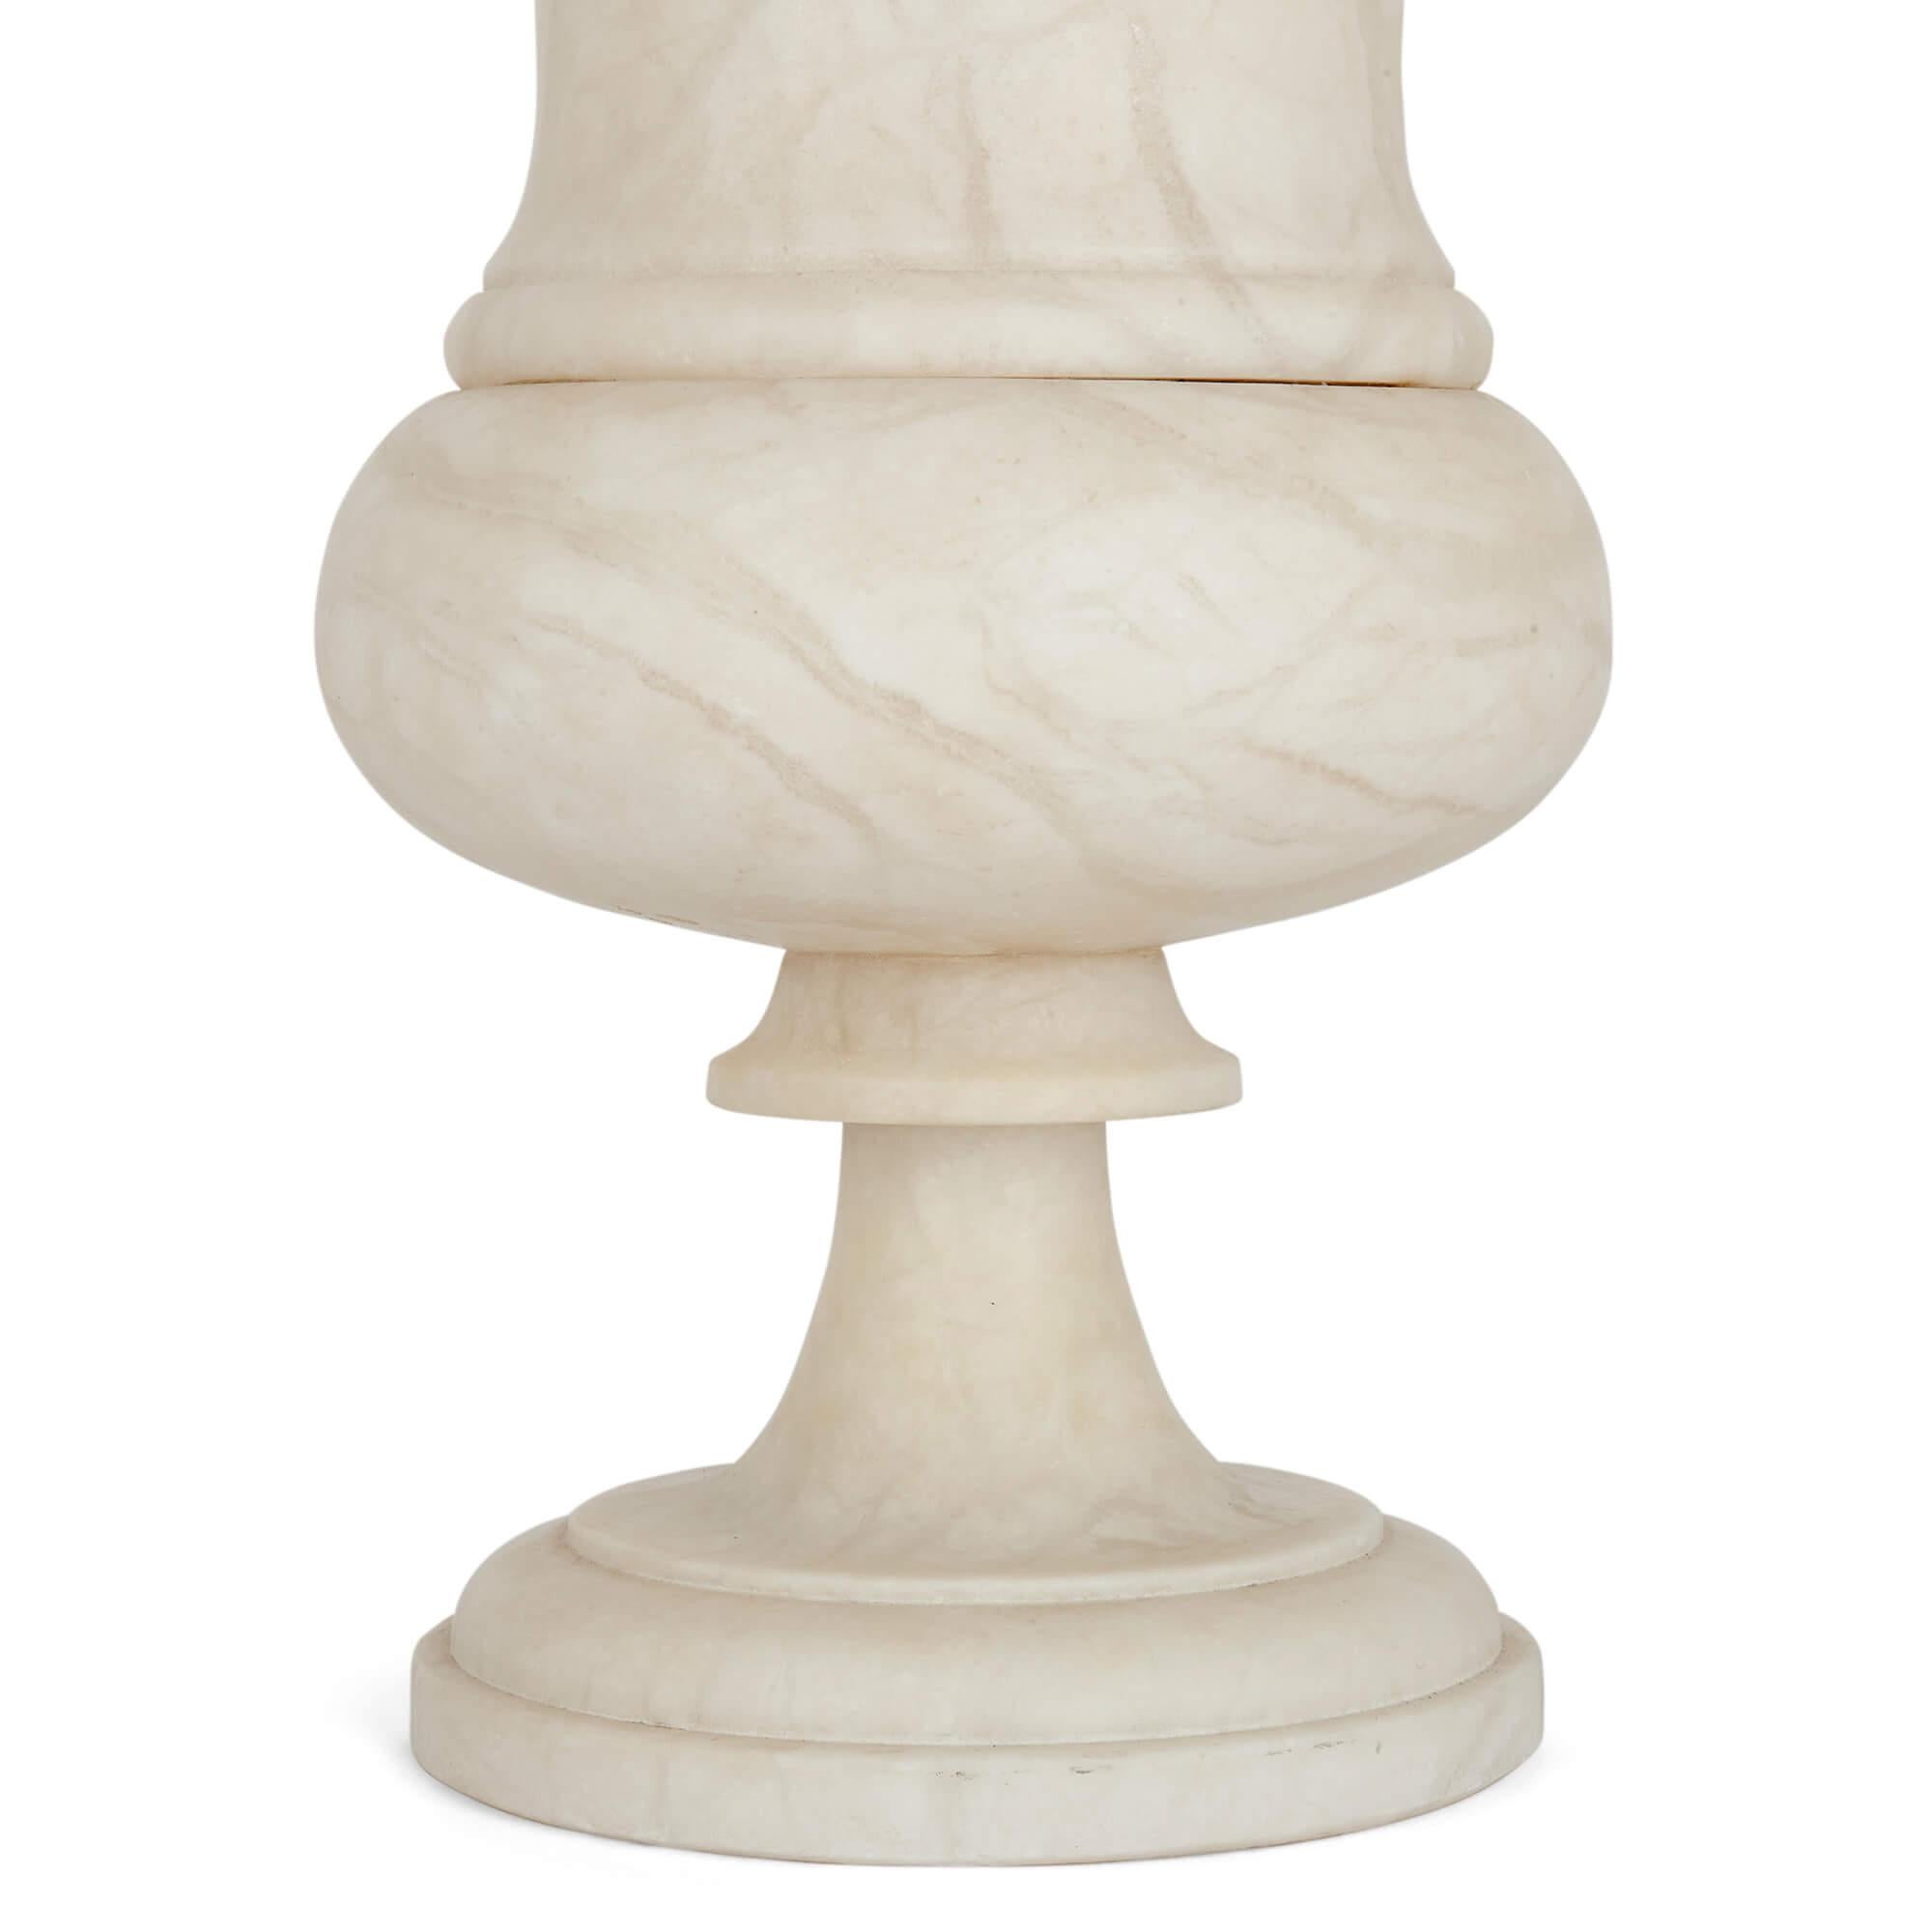 European Large Neoclassical Alabaster Campagna-Shaped Vase For Sale